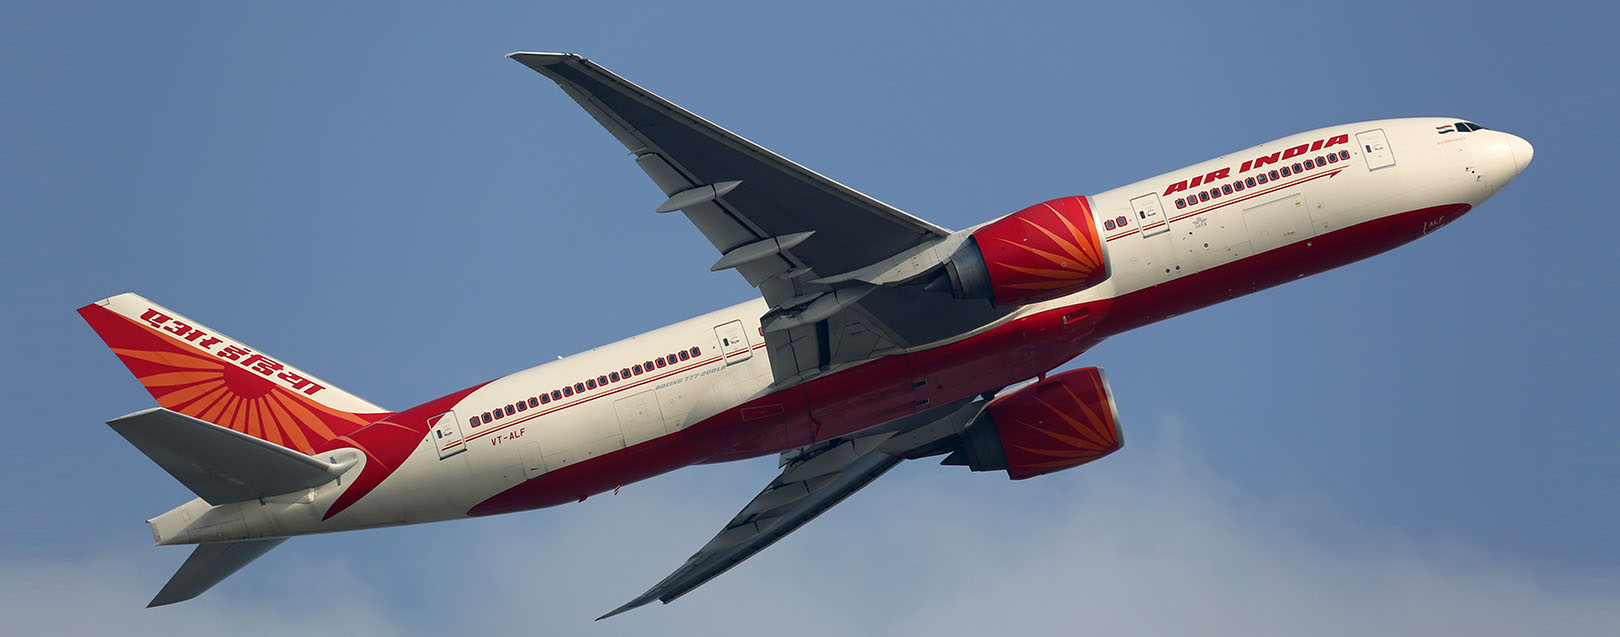 Air India Express starts Delhi-Dubai direct flight